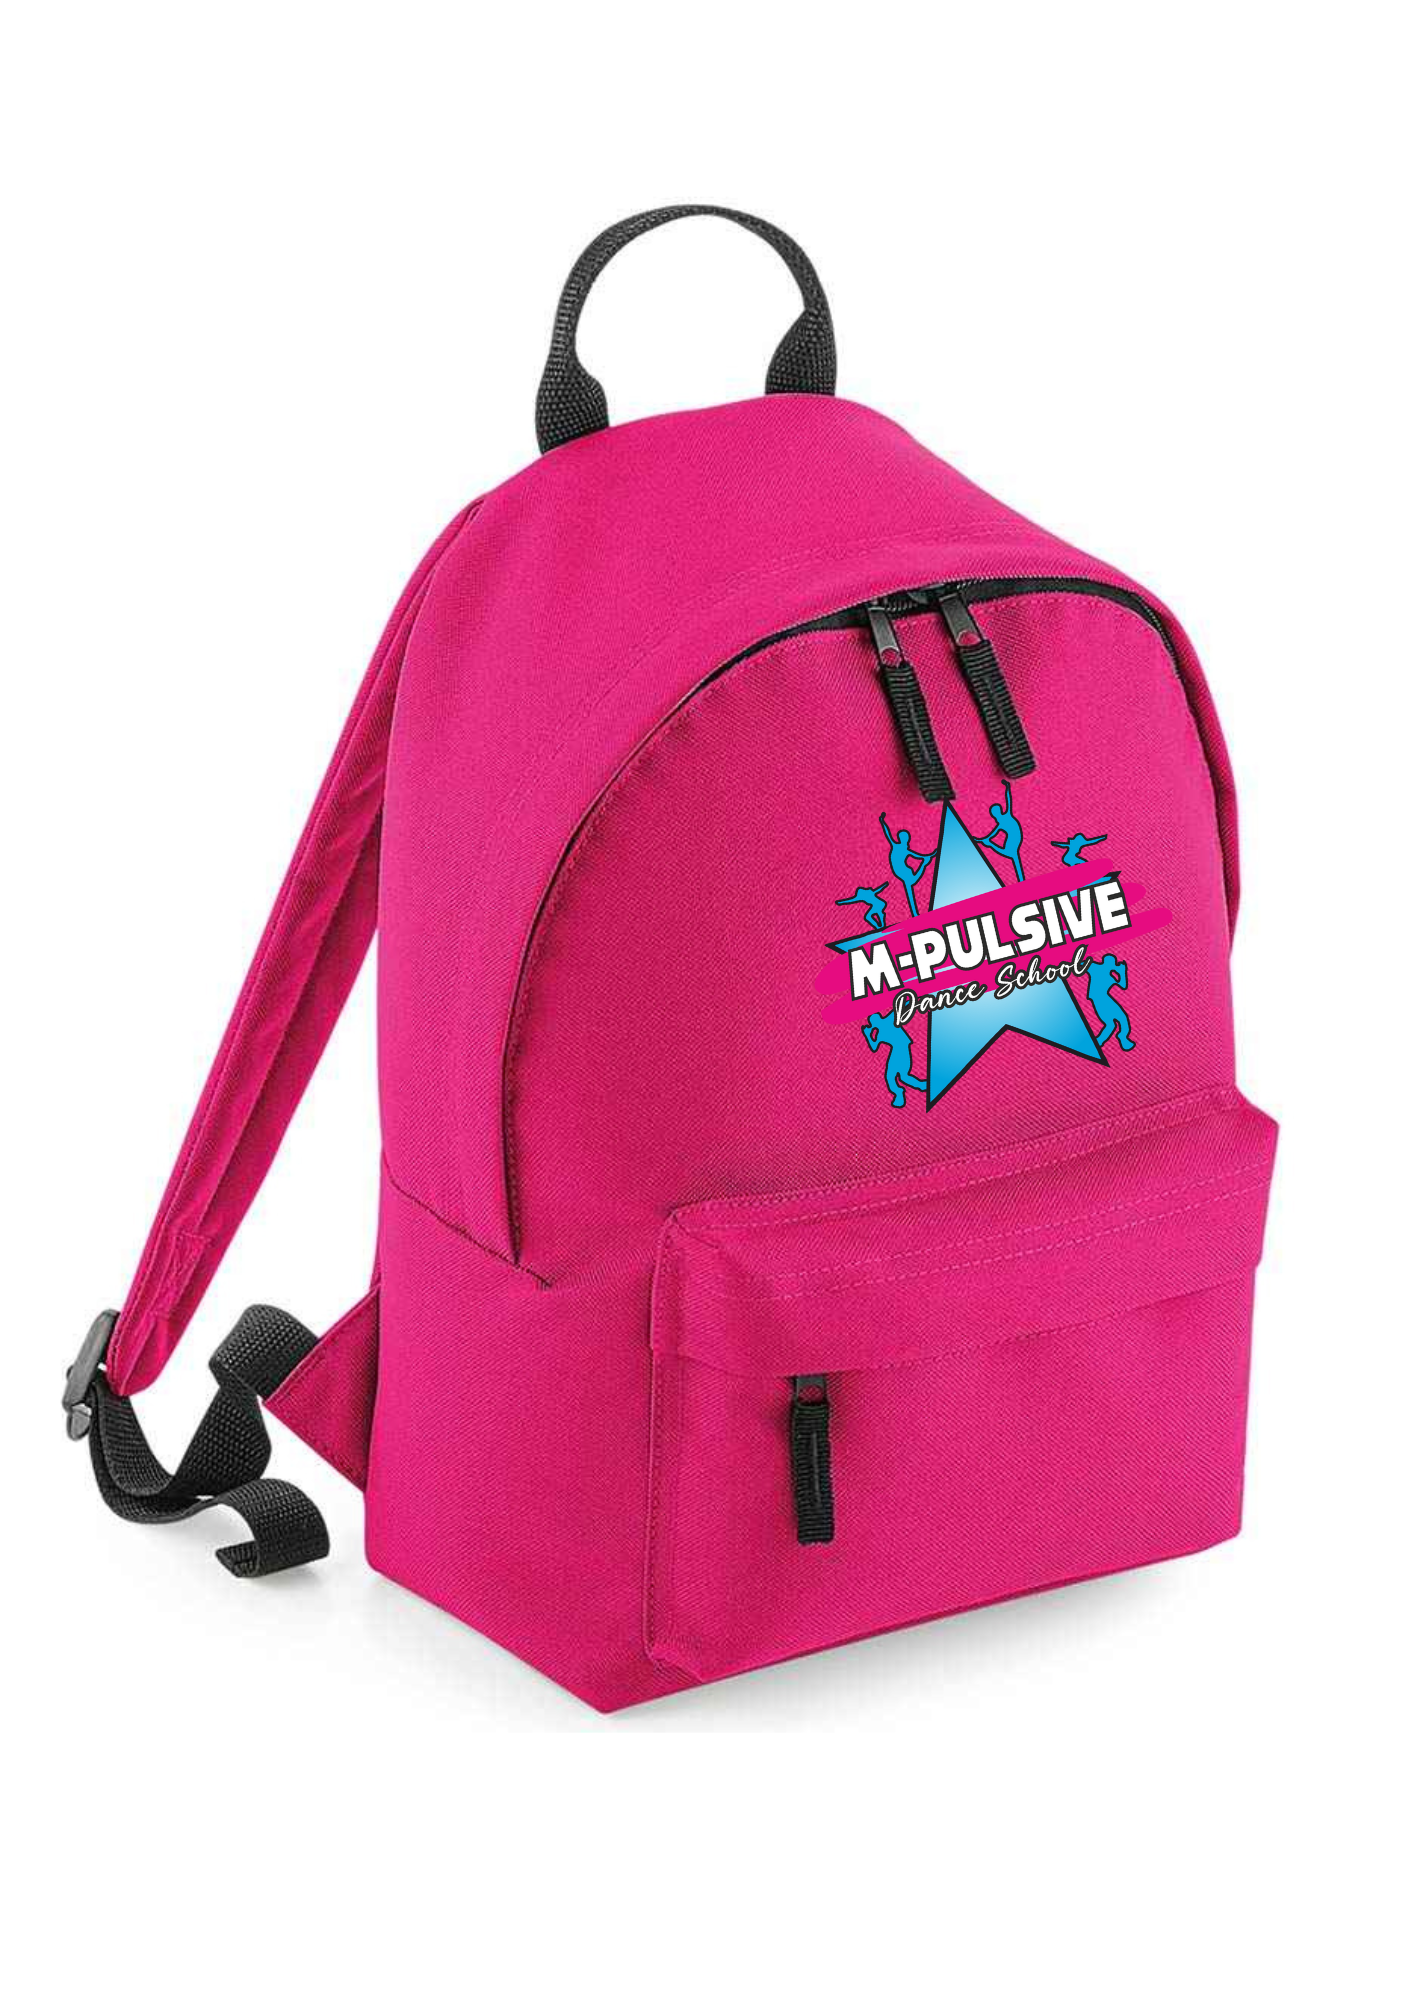 M-Pulsive Junior Backpack